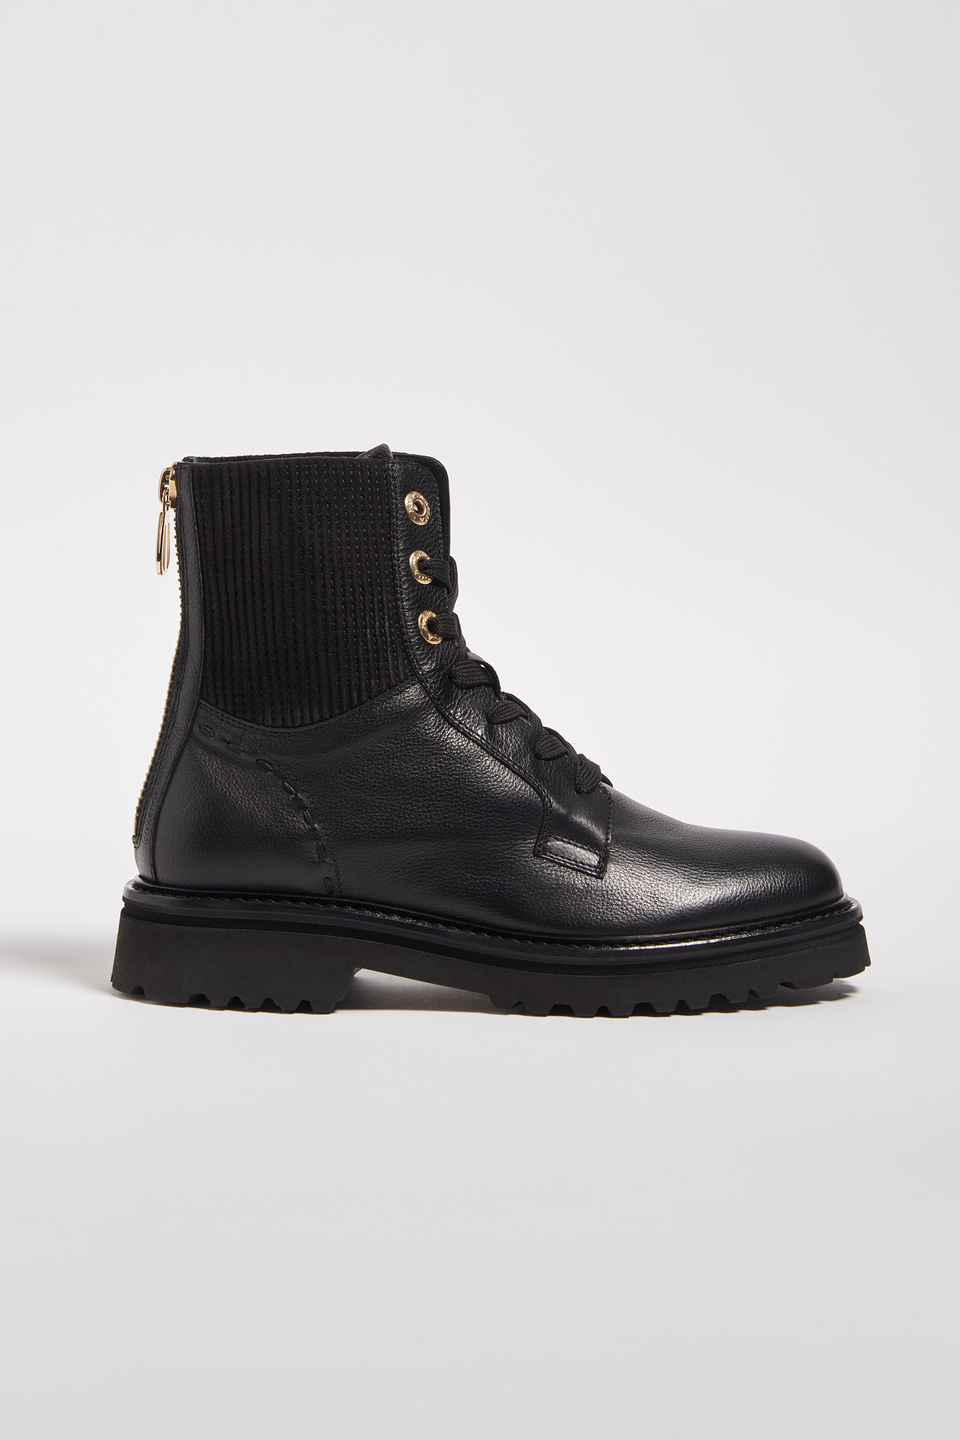 Brushed leather boots - La Martina - Official Online Shop